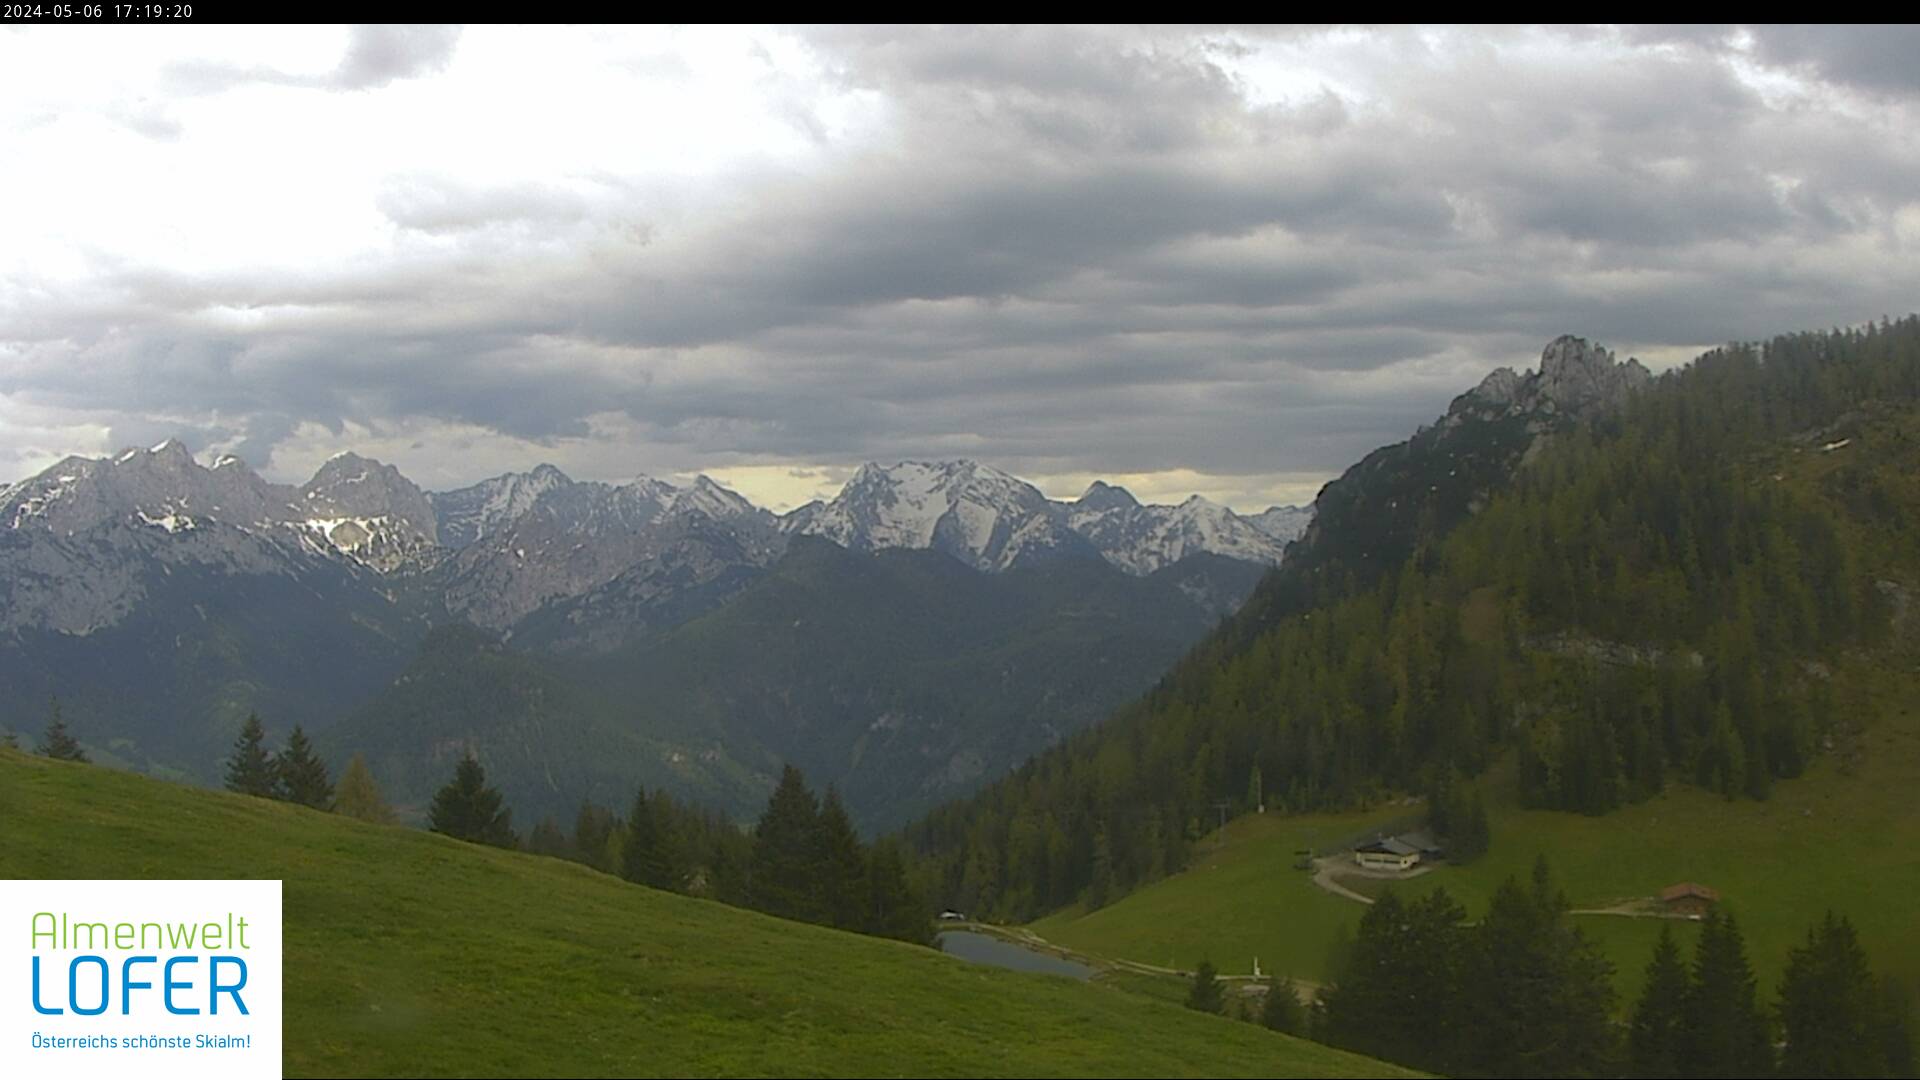 Almenwelt Lofer webcam - Berchtesgadener Alpen